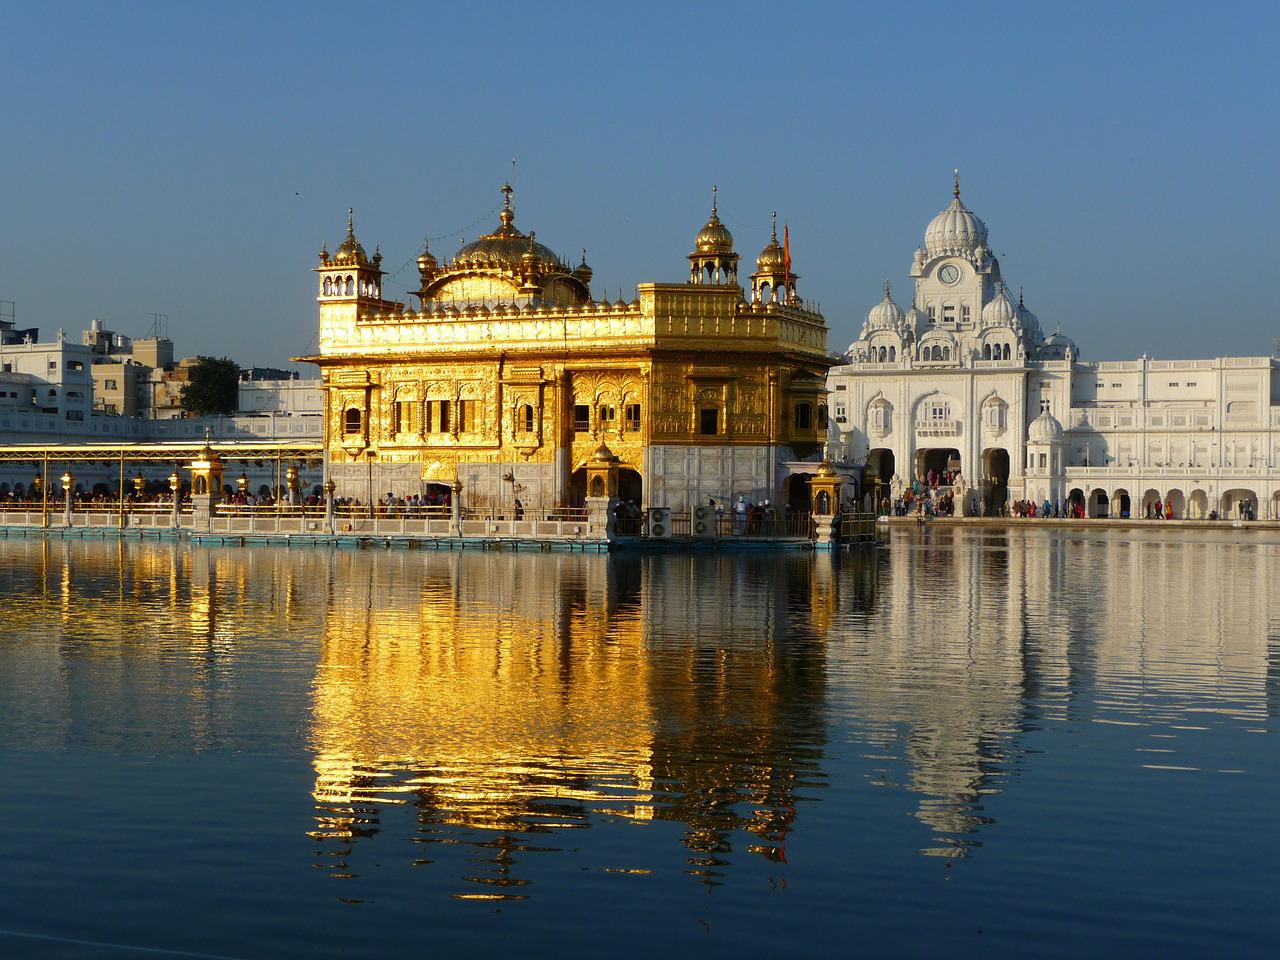 Sri Harmandir Sahib (Golden Temple), the best place to visit in India